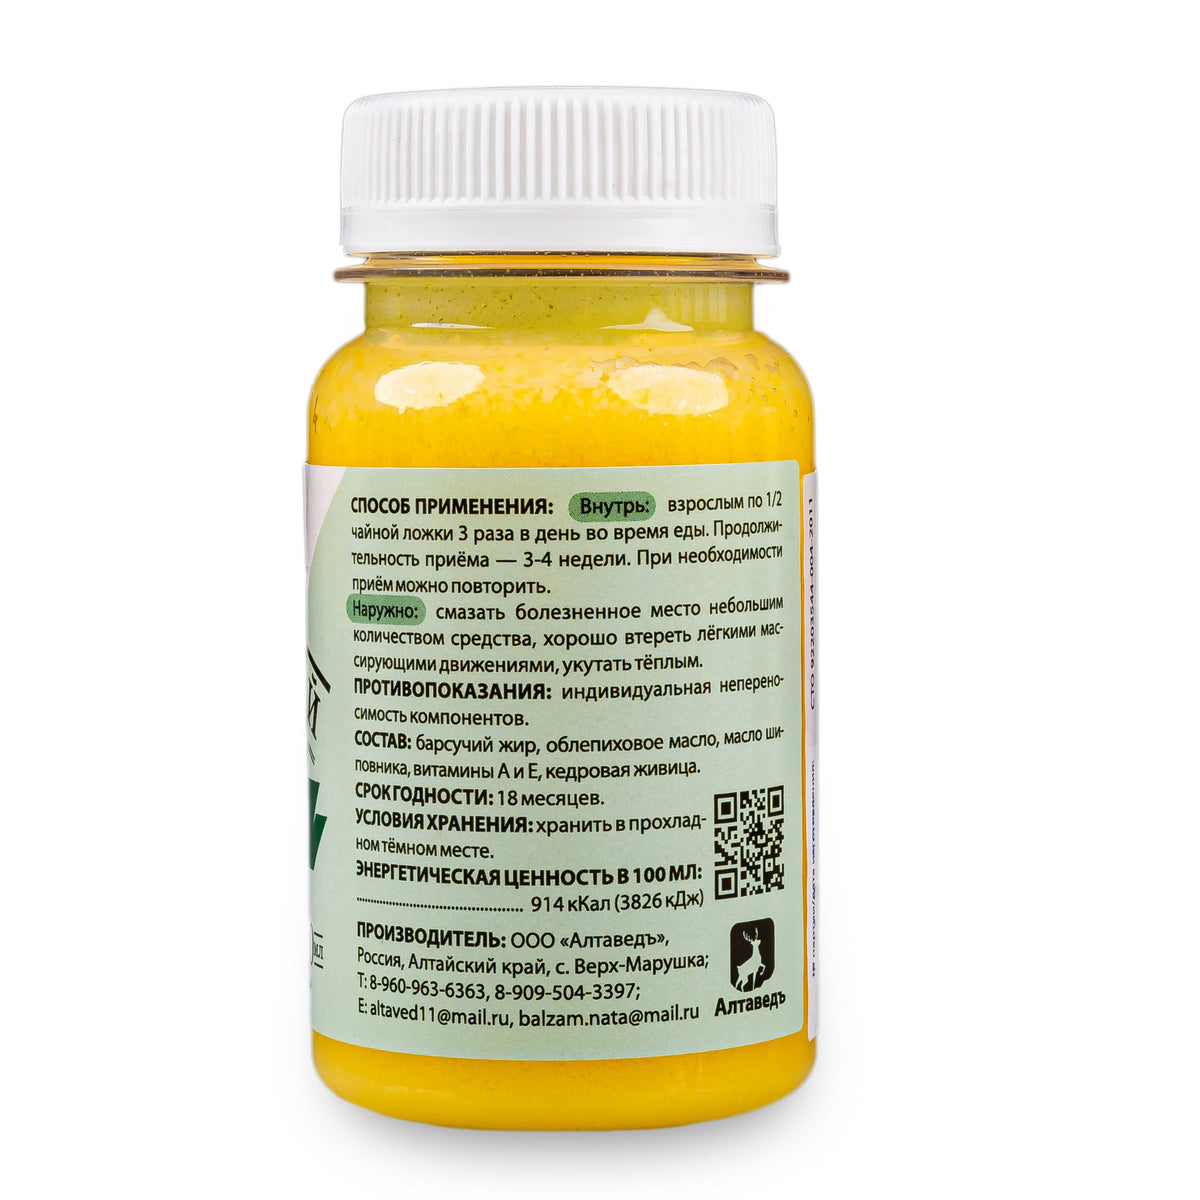 Cream-Gel “Badger Fat” Siberian Sea Buckthorn Oil Pine Resin Vitamins